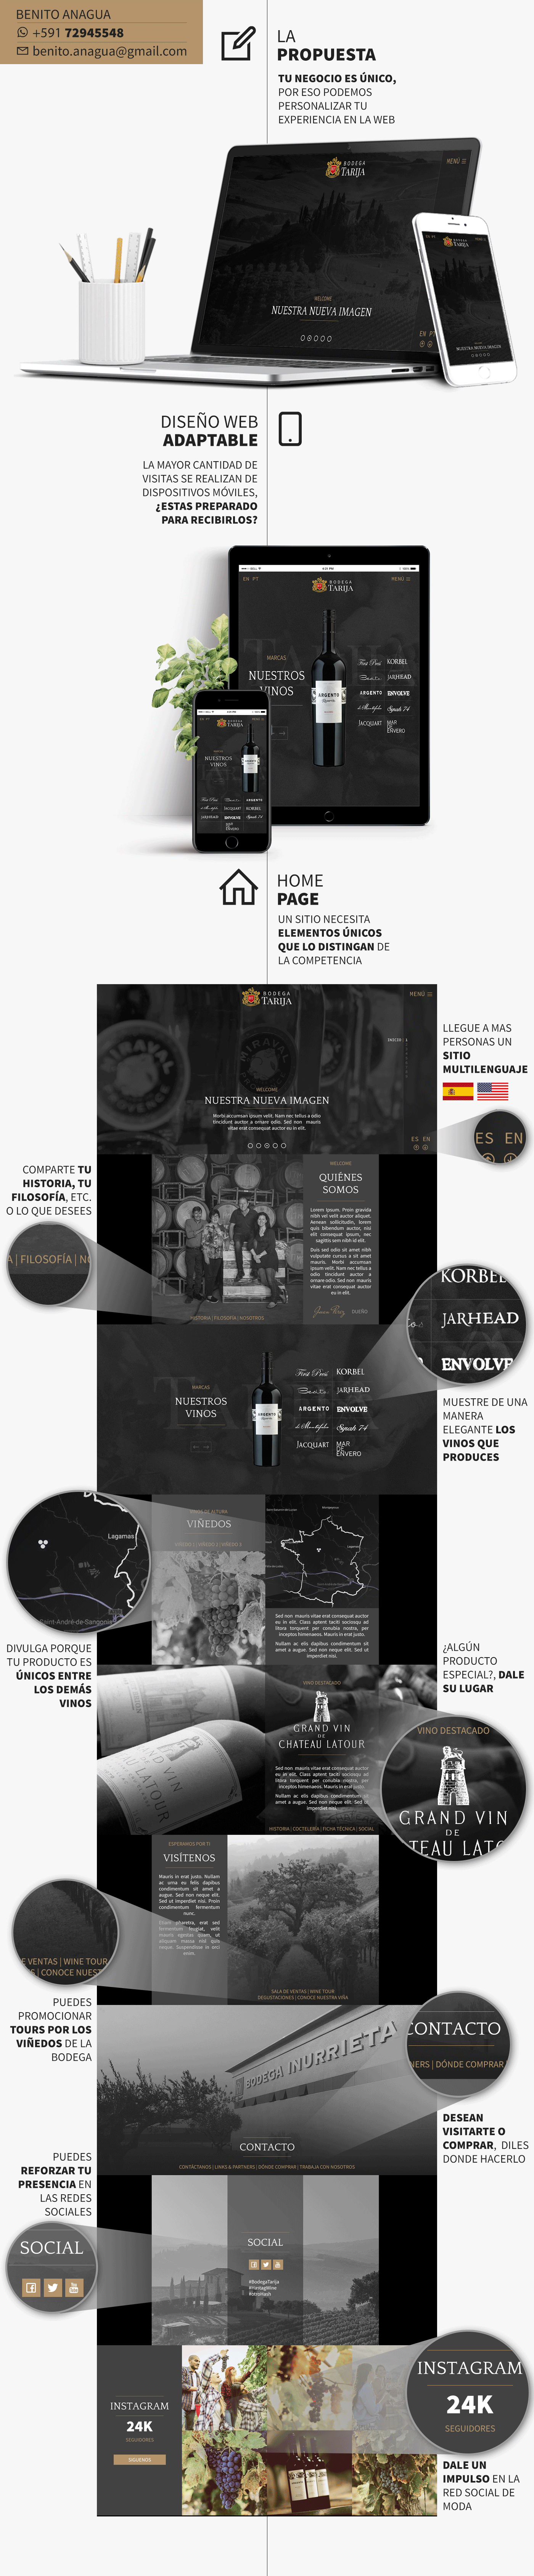 winery wine Web